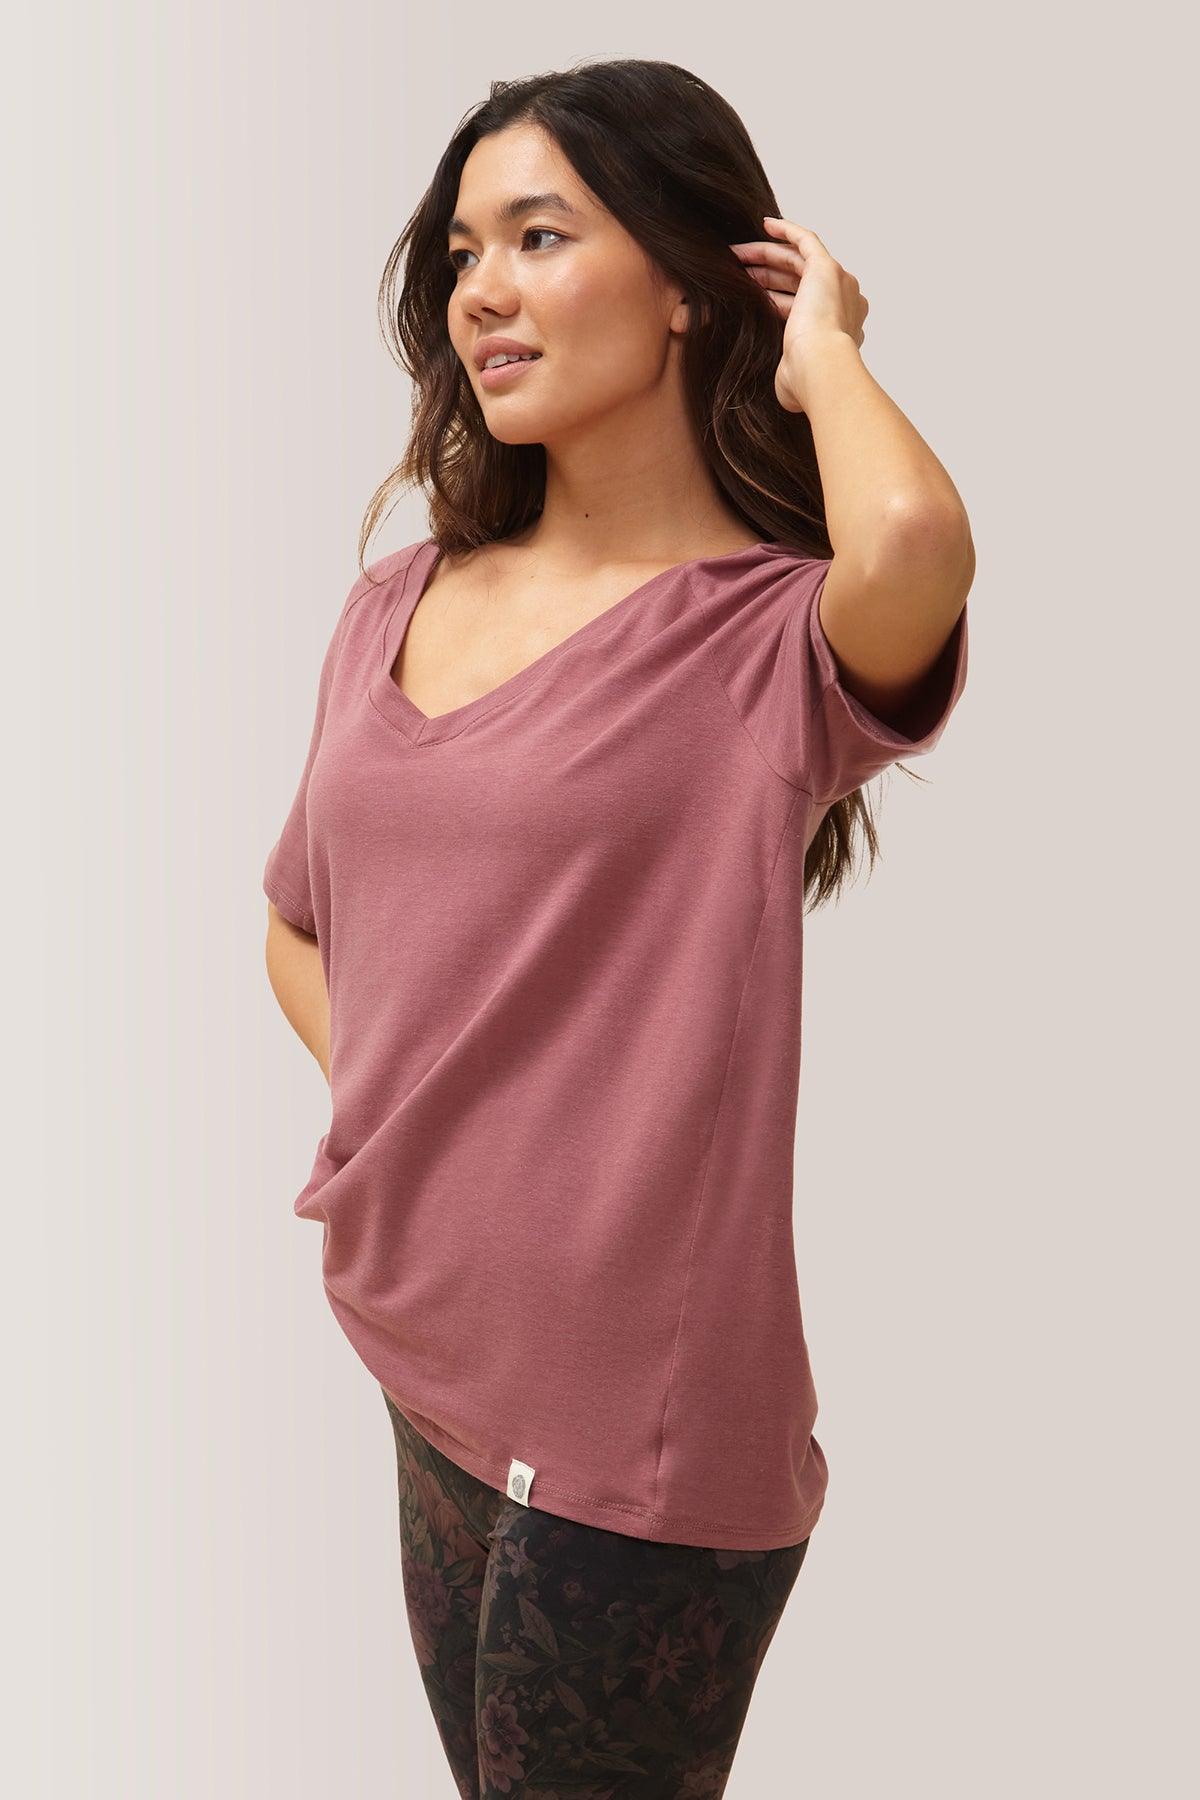 Femme vêtue du t-shirt blissful flow par Rose Boreal. / Women wearing the blissful flow t-shirt by Rose Boreal. - Goddess